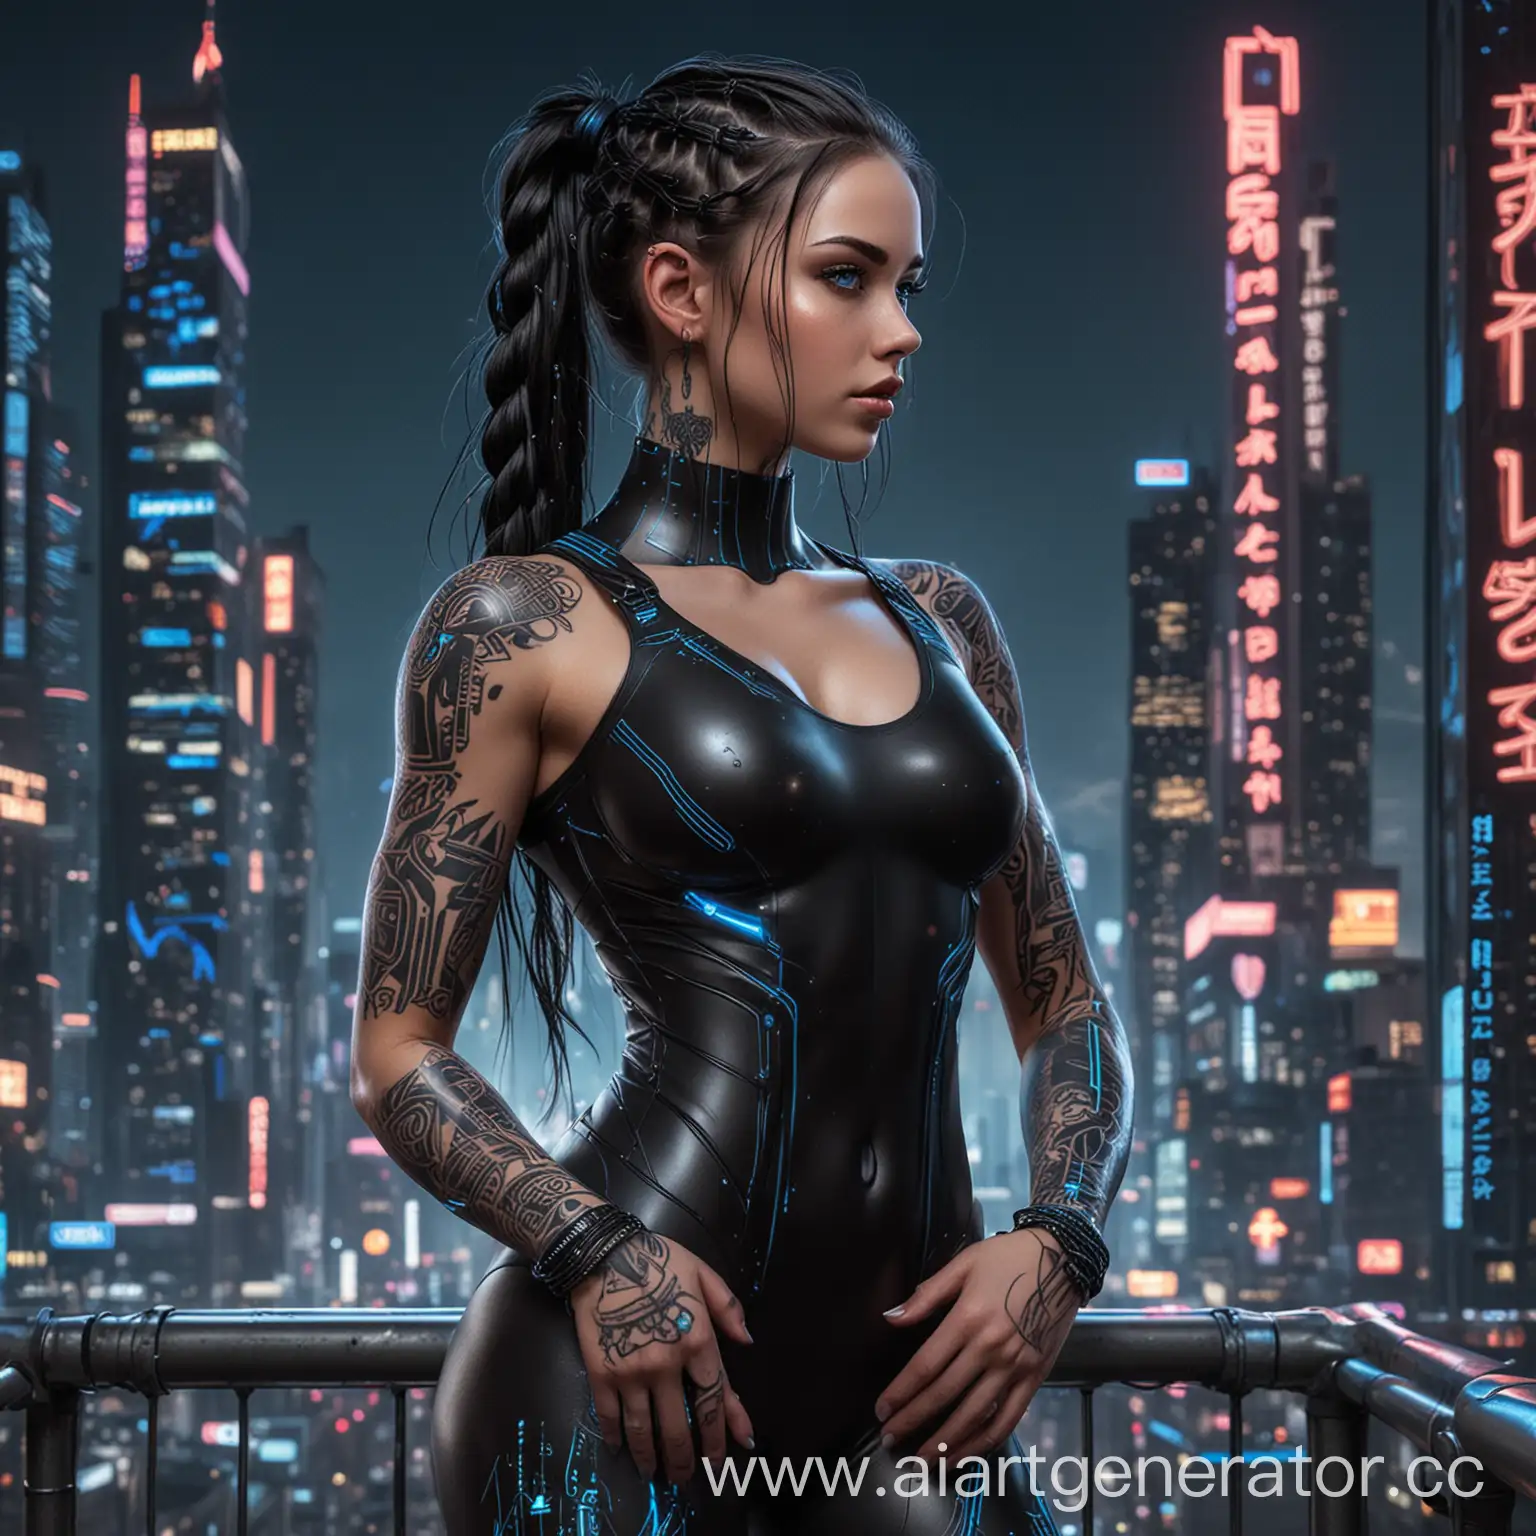 Futuristic-Cyberpunk-Woman-with-Glowing-Enhancements-in-Urban-Night-Cityscape